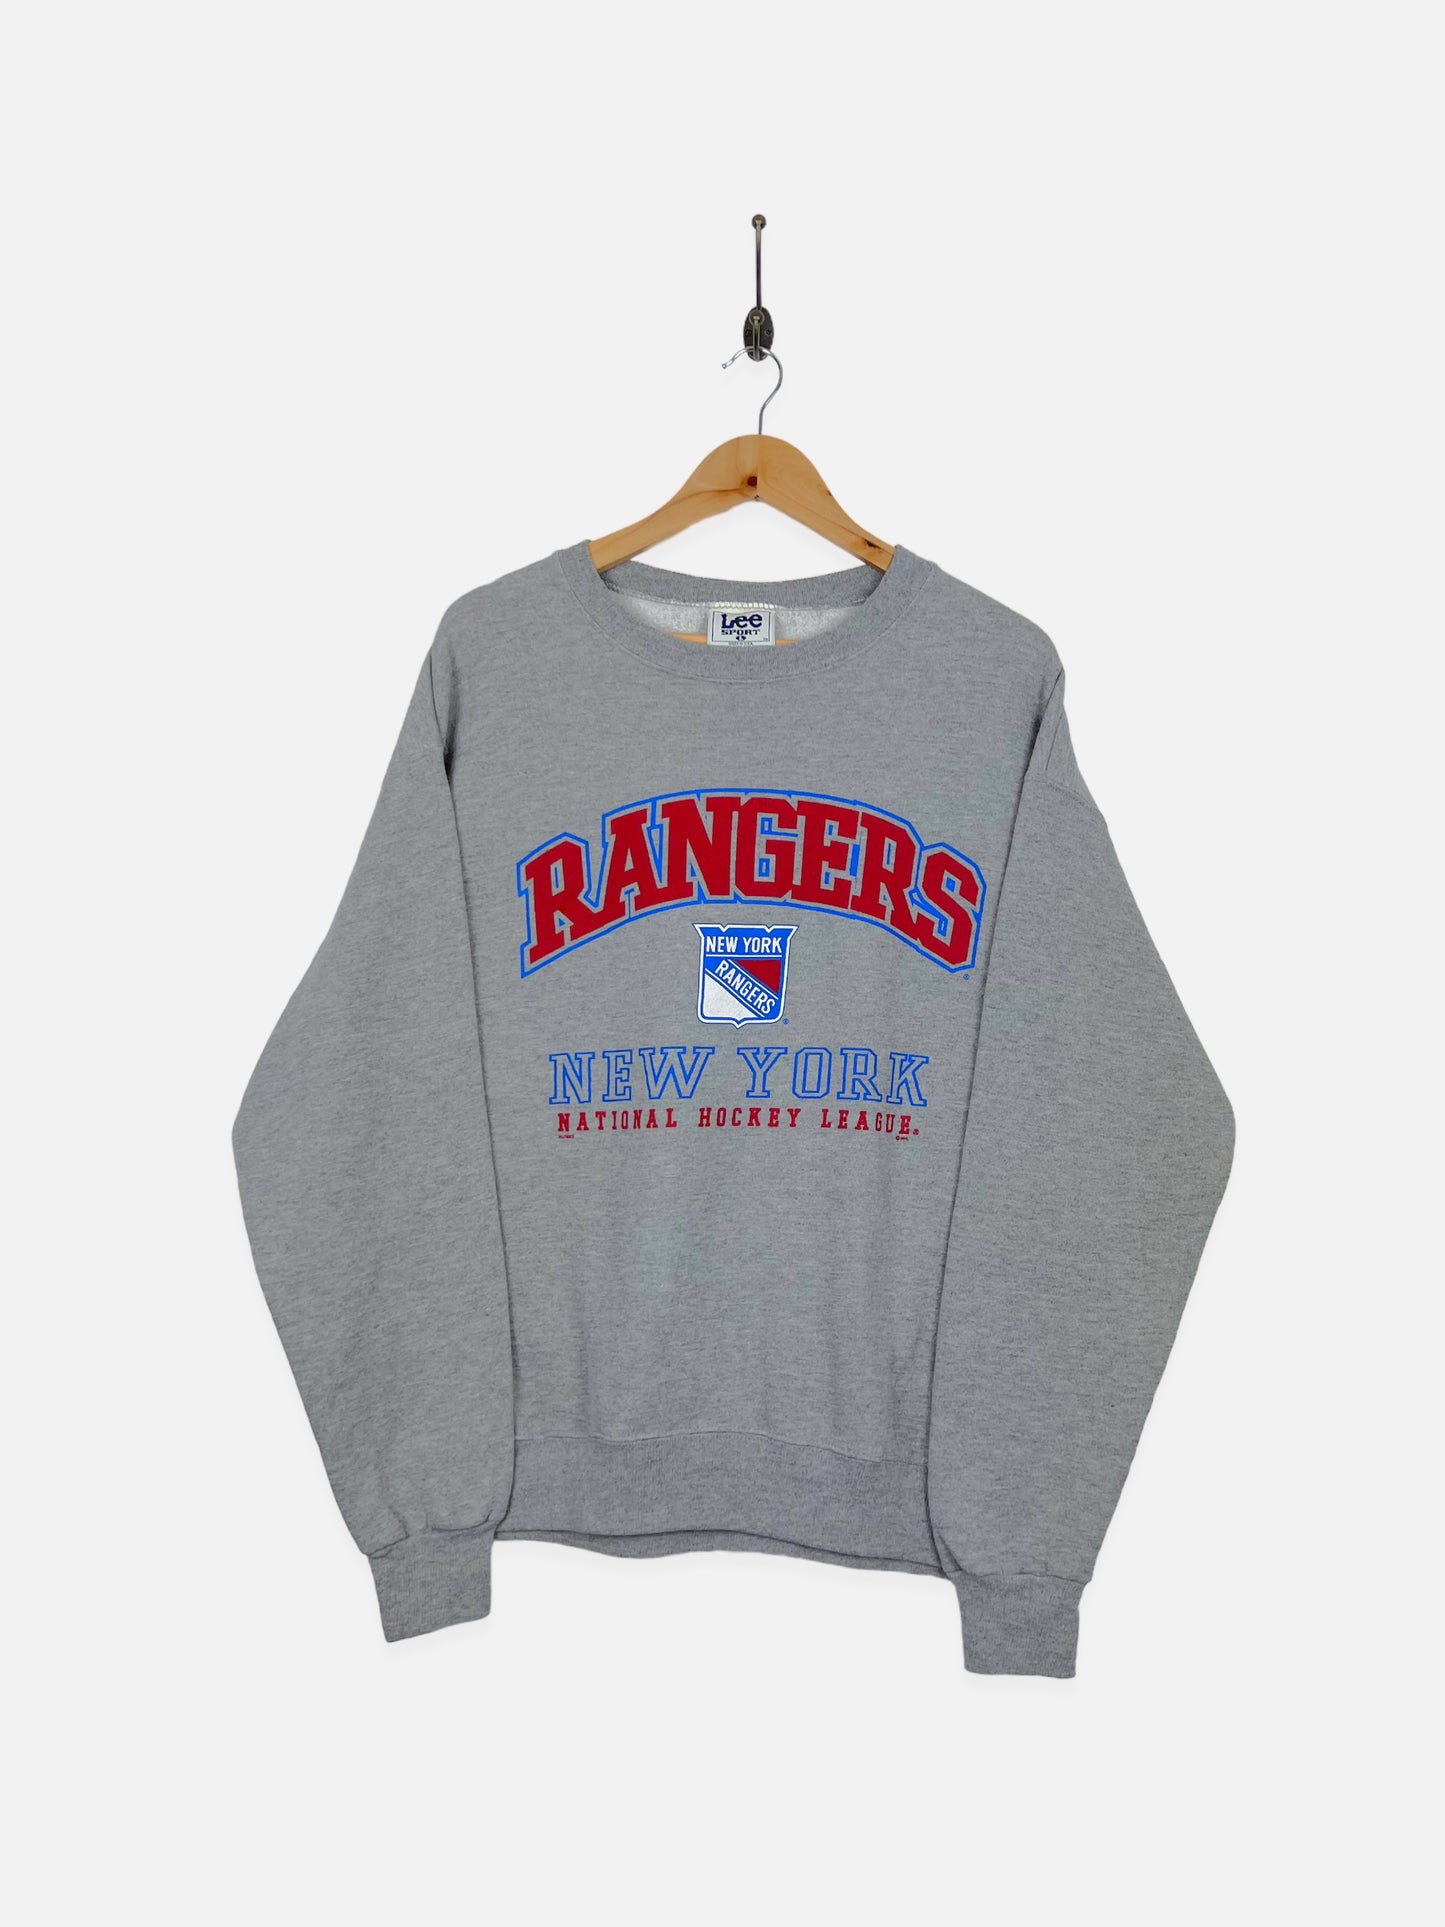 90's New York Rangers NHL USA Made Vintage Sweatshirt Size M-L